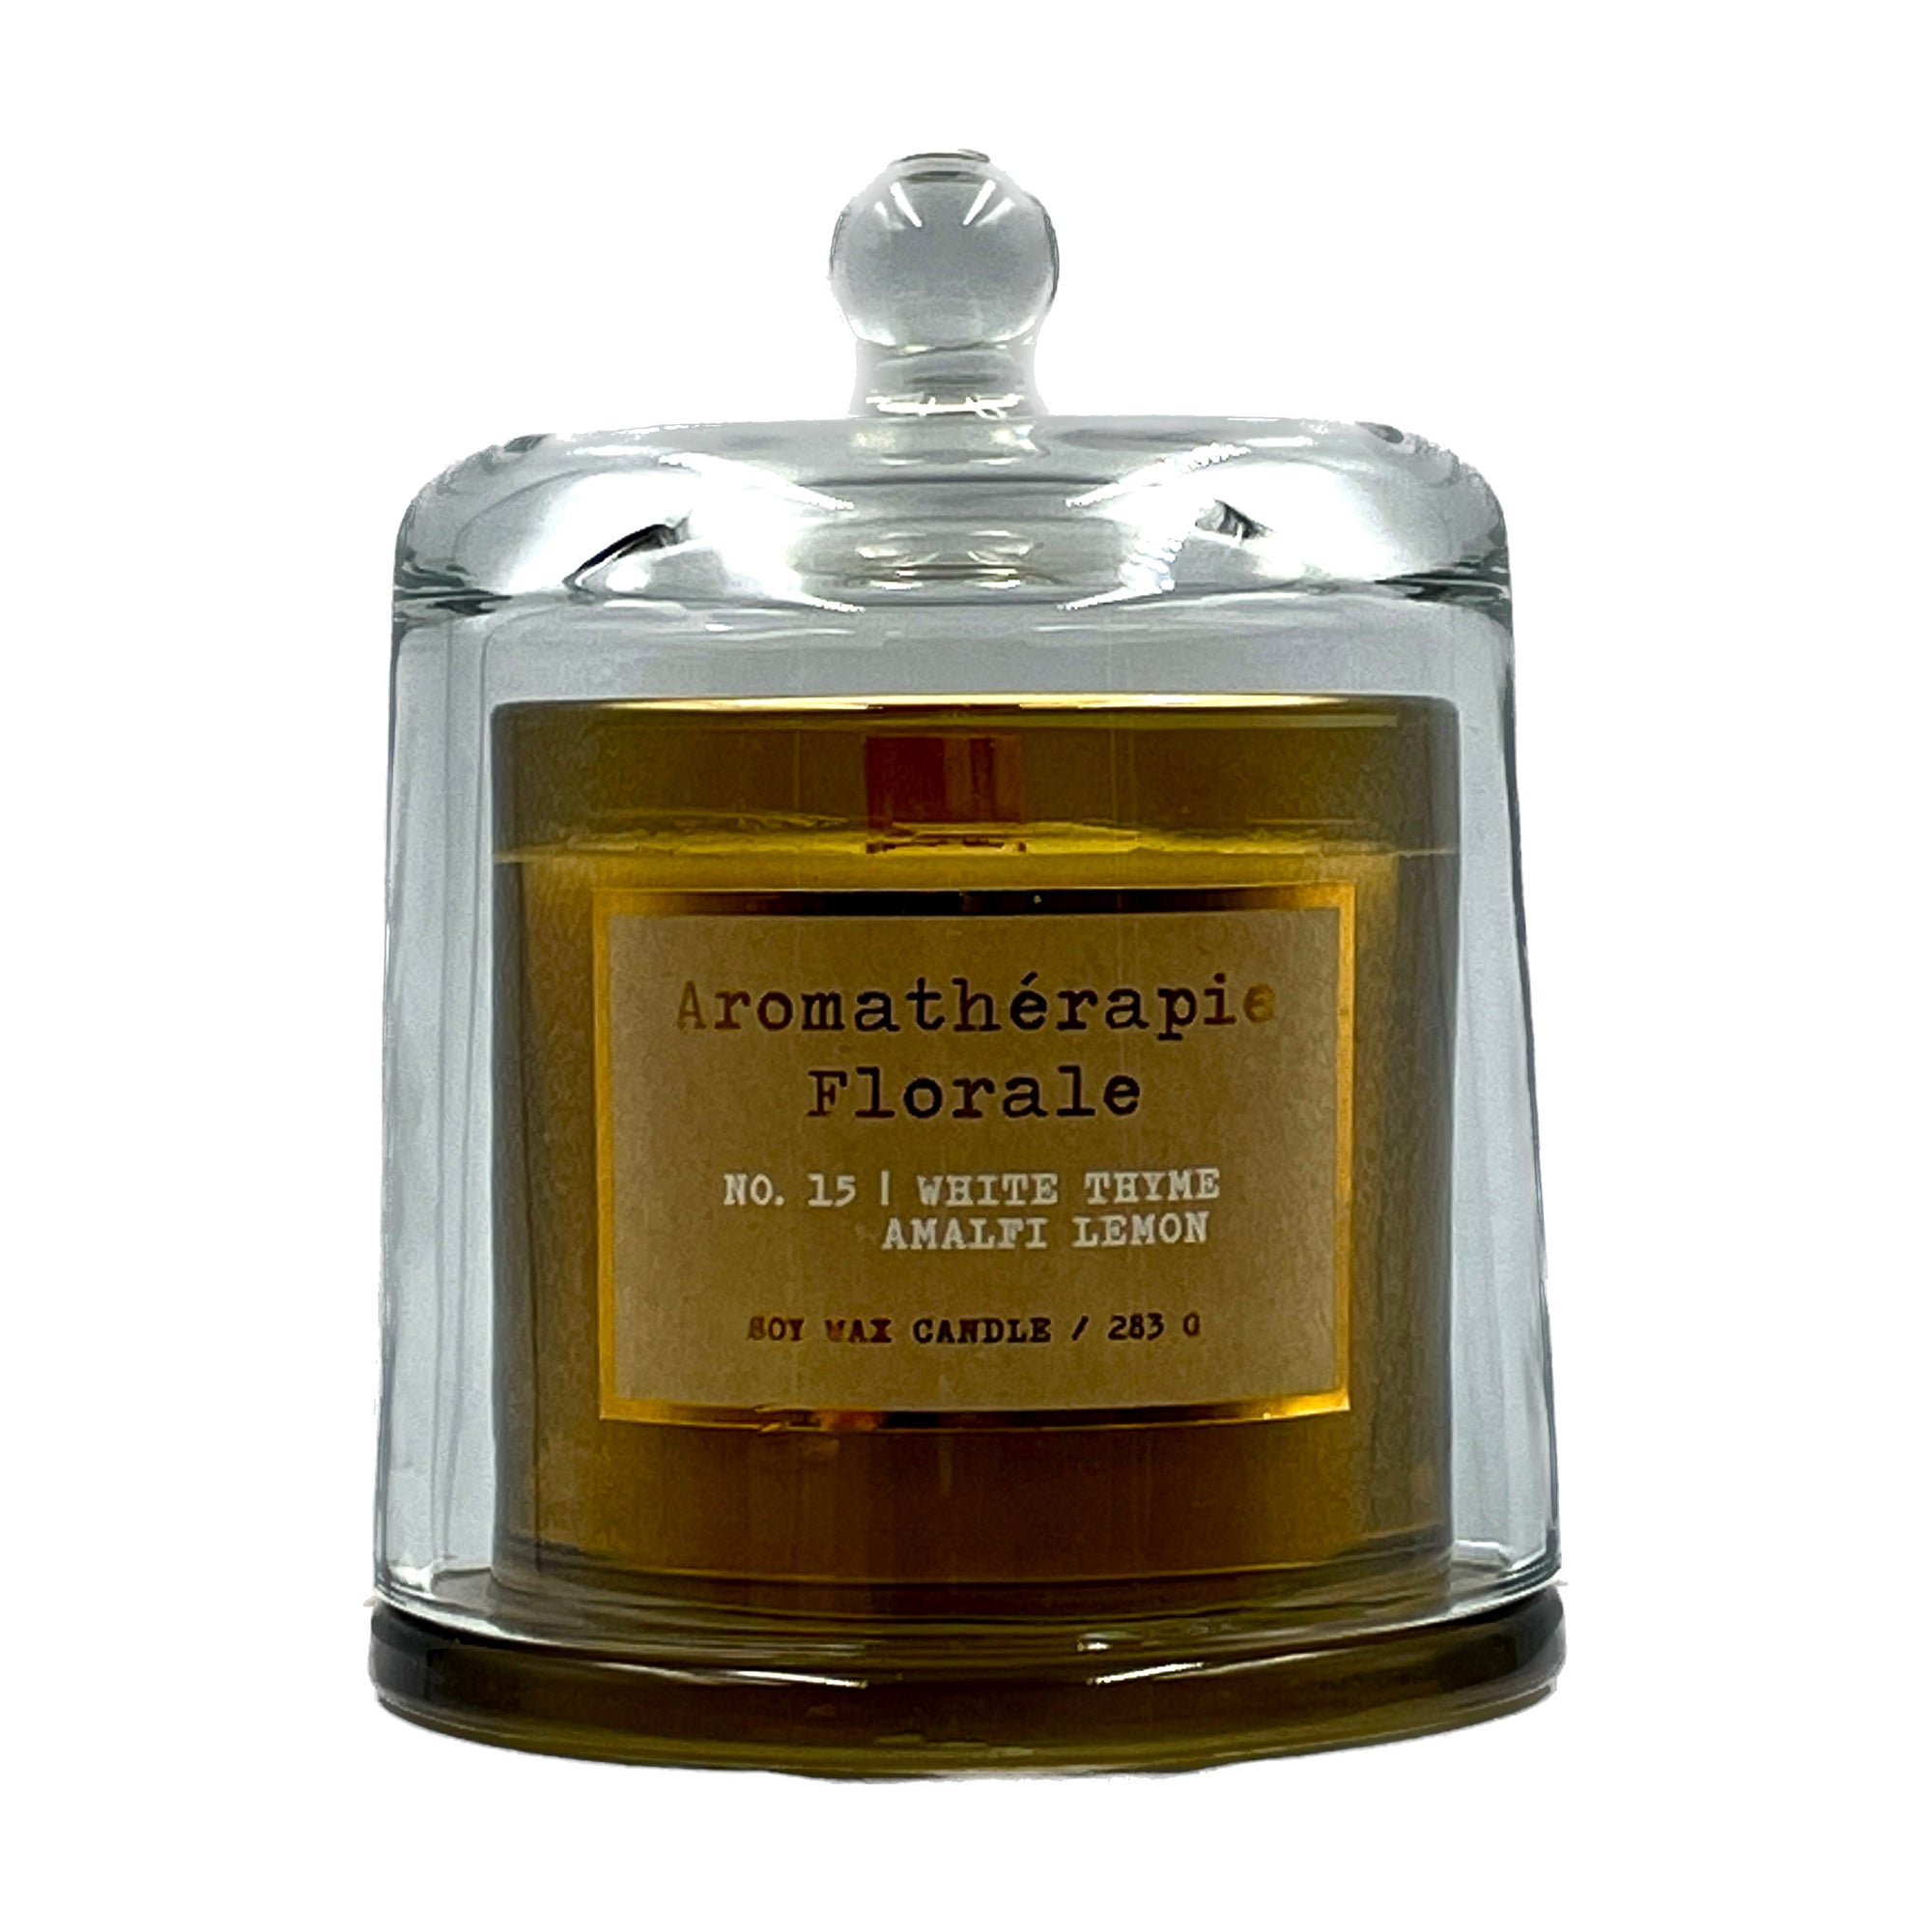 White Thyme Amalfi Lemon - Aromathérapie Florale Soy Candle